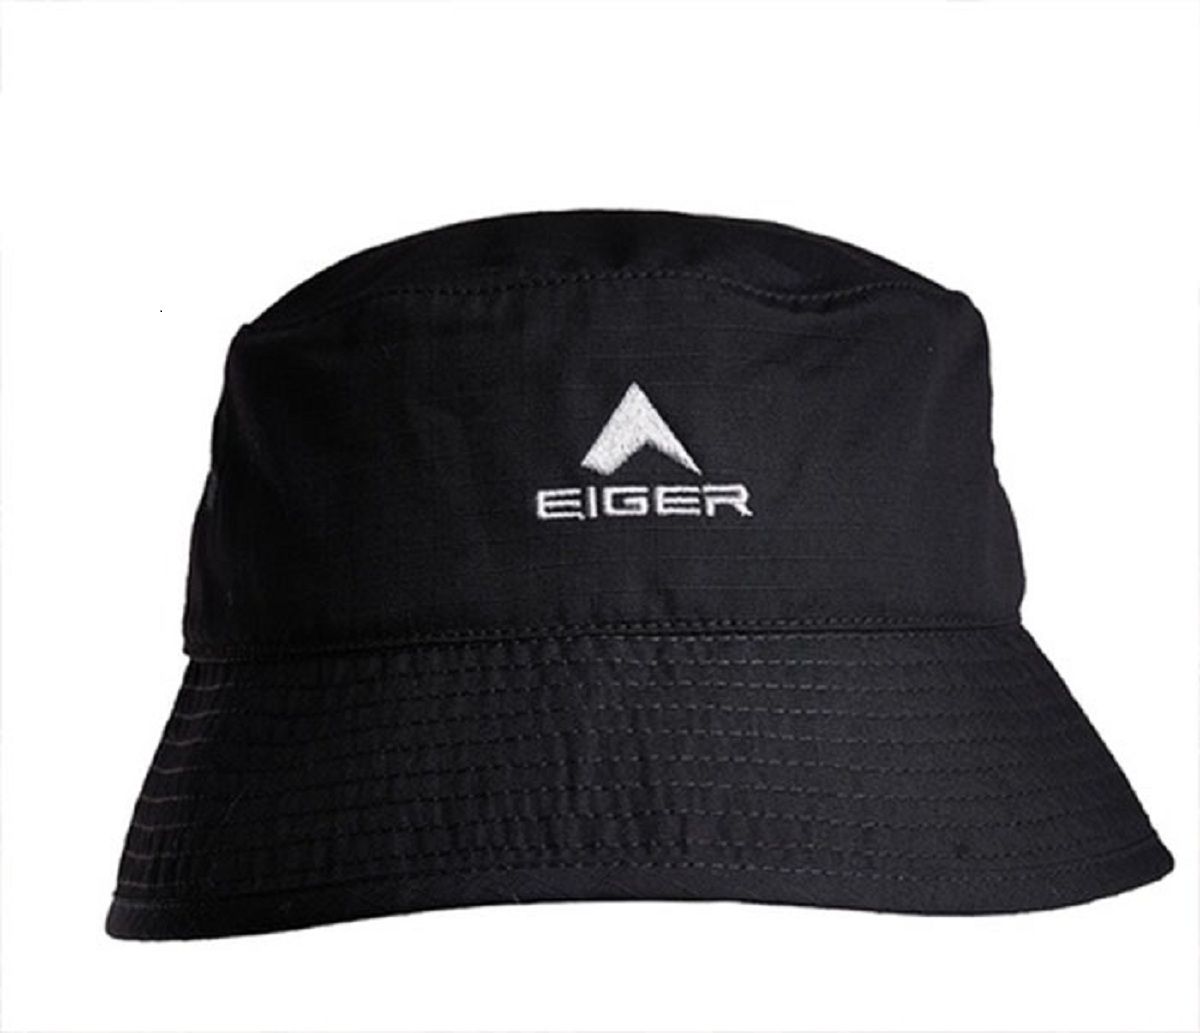 Topi Eiger, tidak hanya memberikan perlindungan dari sinar matahari, akan tetapi memberikan sentuhan gaya yang keren pada penampilan Anda.